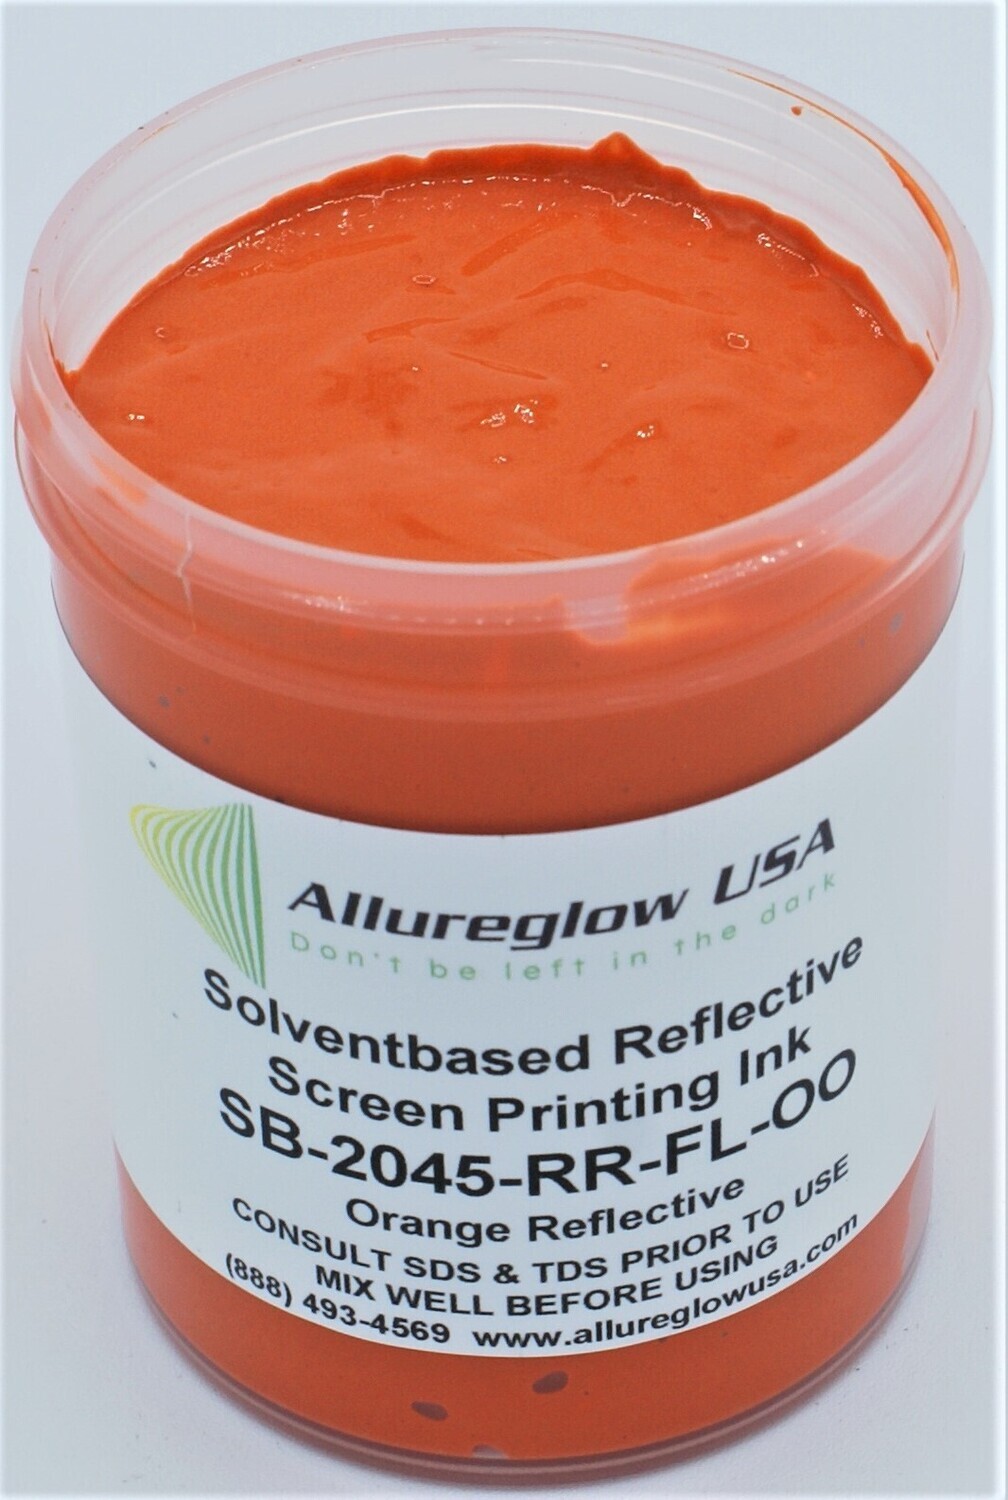 SB-2045-RR-FL-OO-FV SOLVENT BASED ORANGE REFLECTIVE SCREEN PRINTING INK - FIVE GALLON